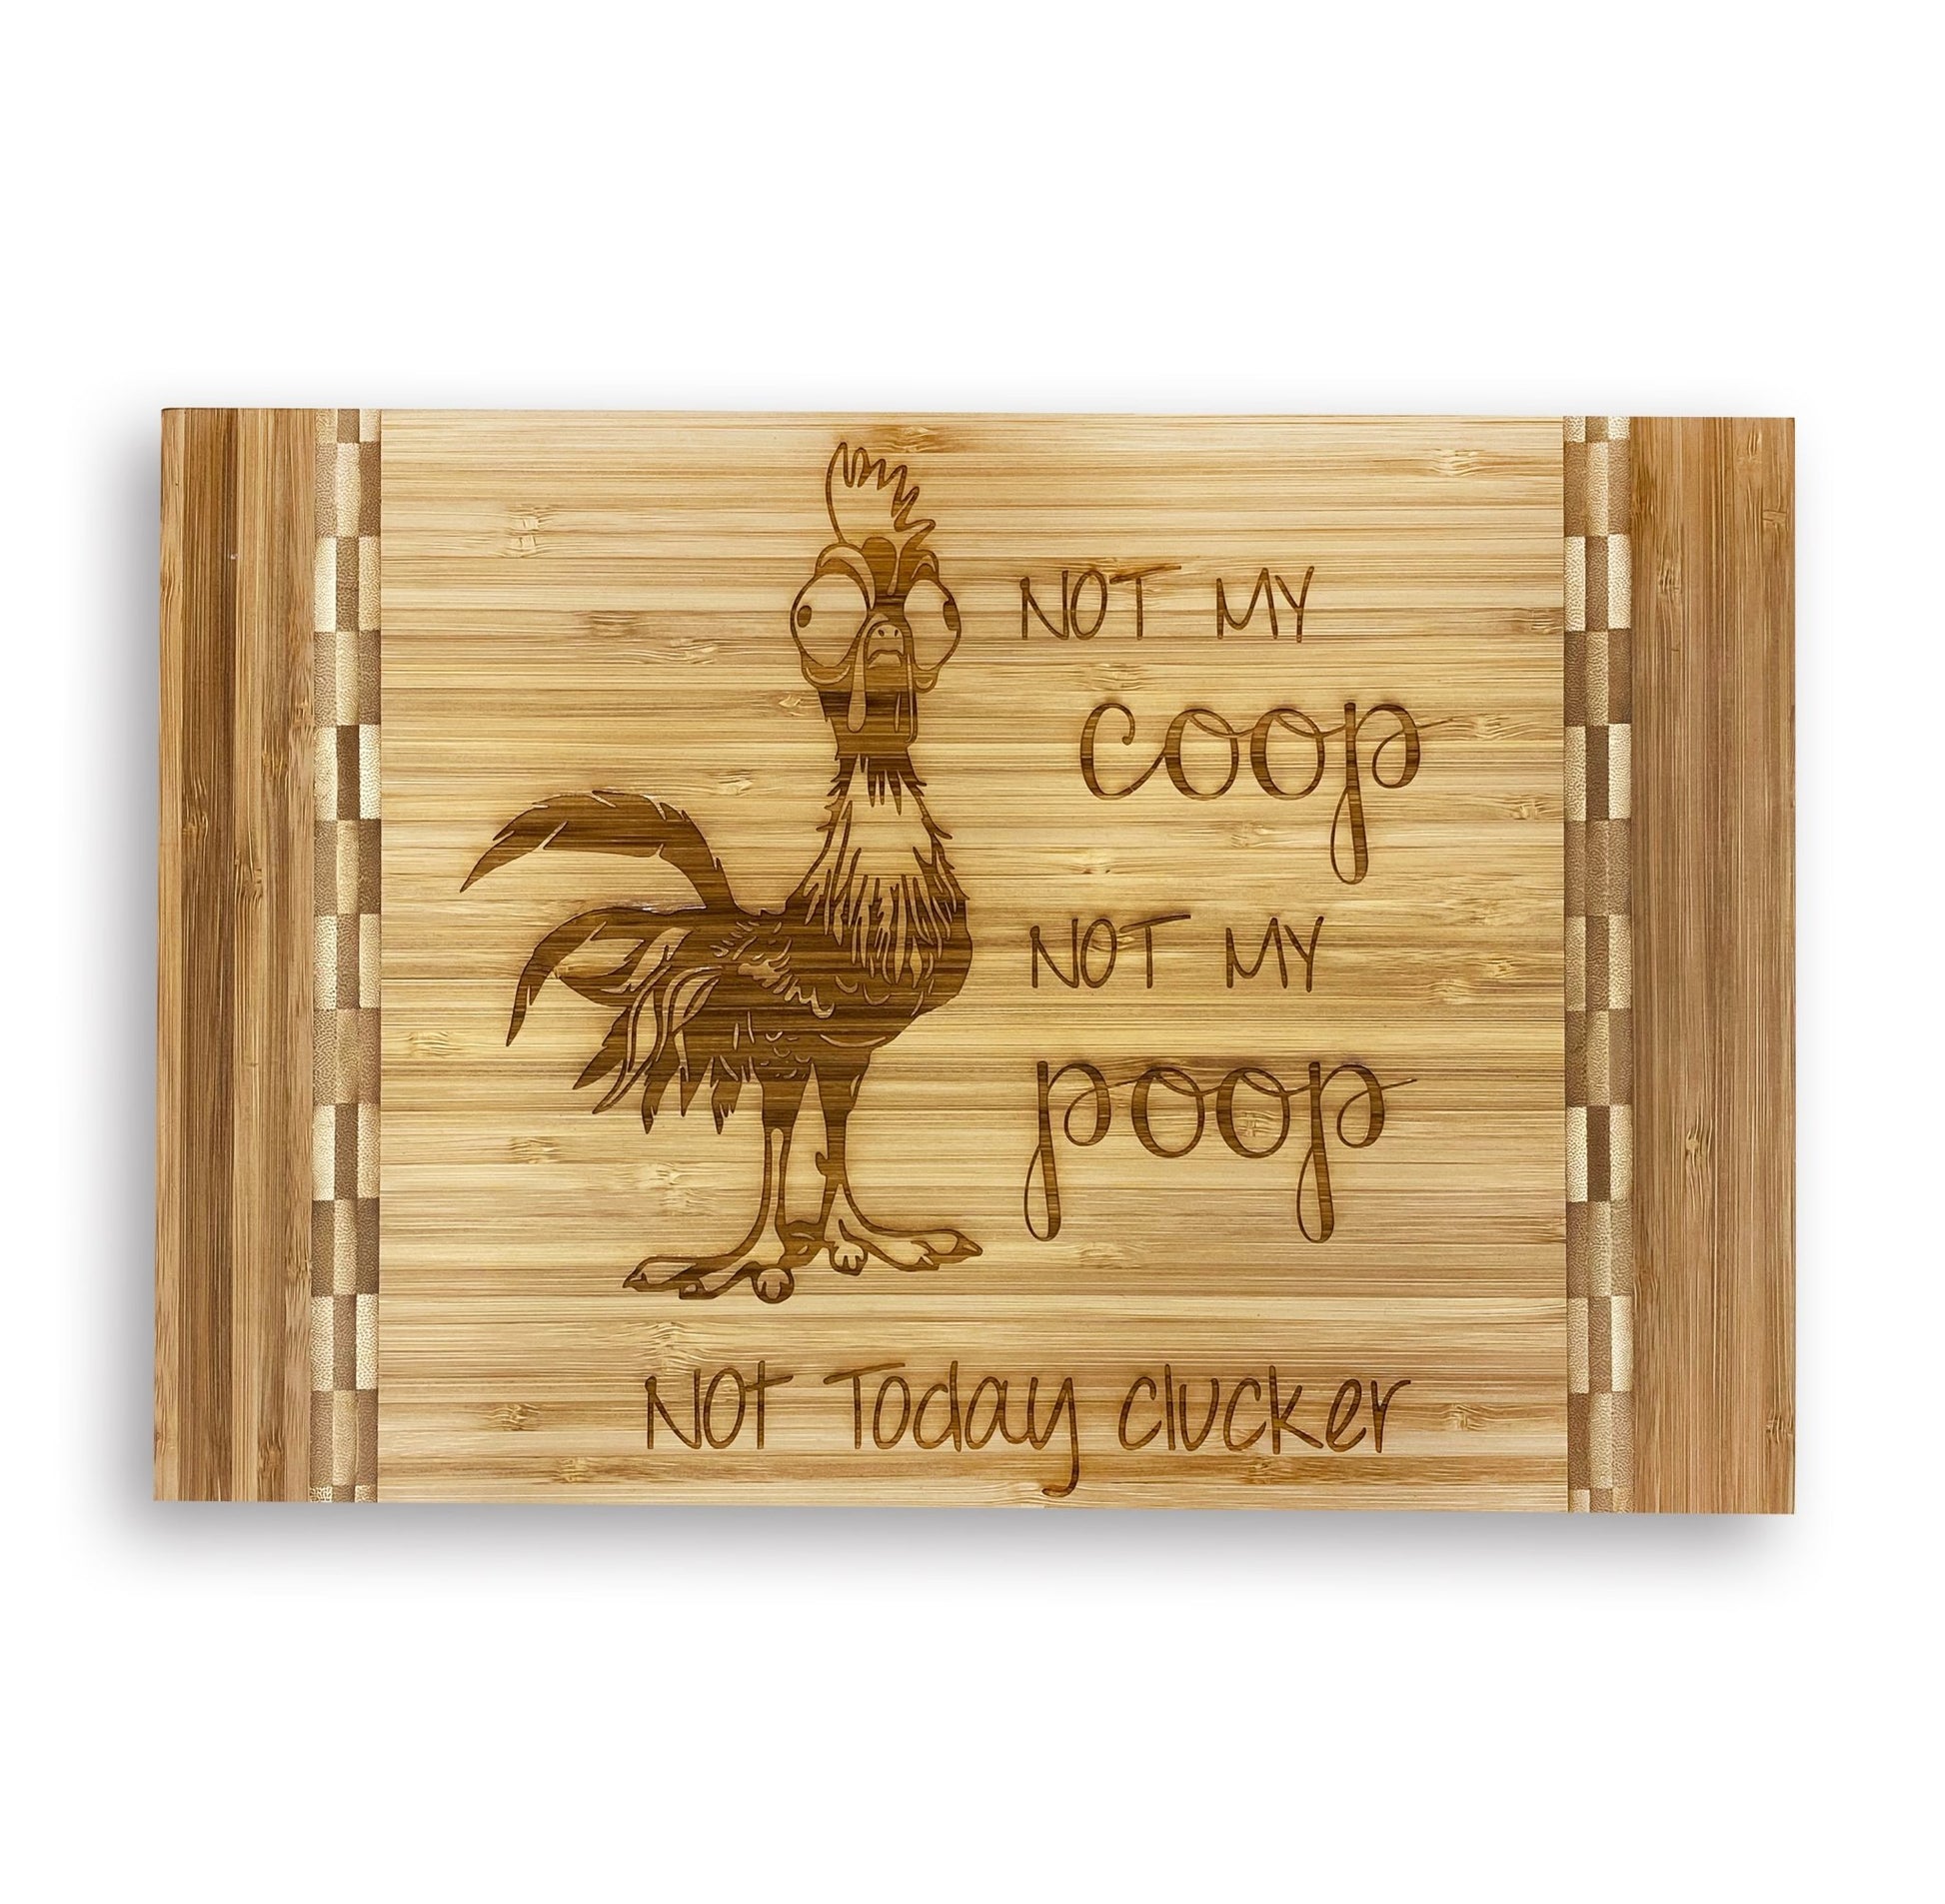 Funny Chicken Cut Board Bamboo Kitchen Decor Gift for Woman Mom Grandma